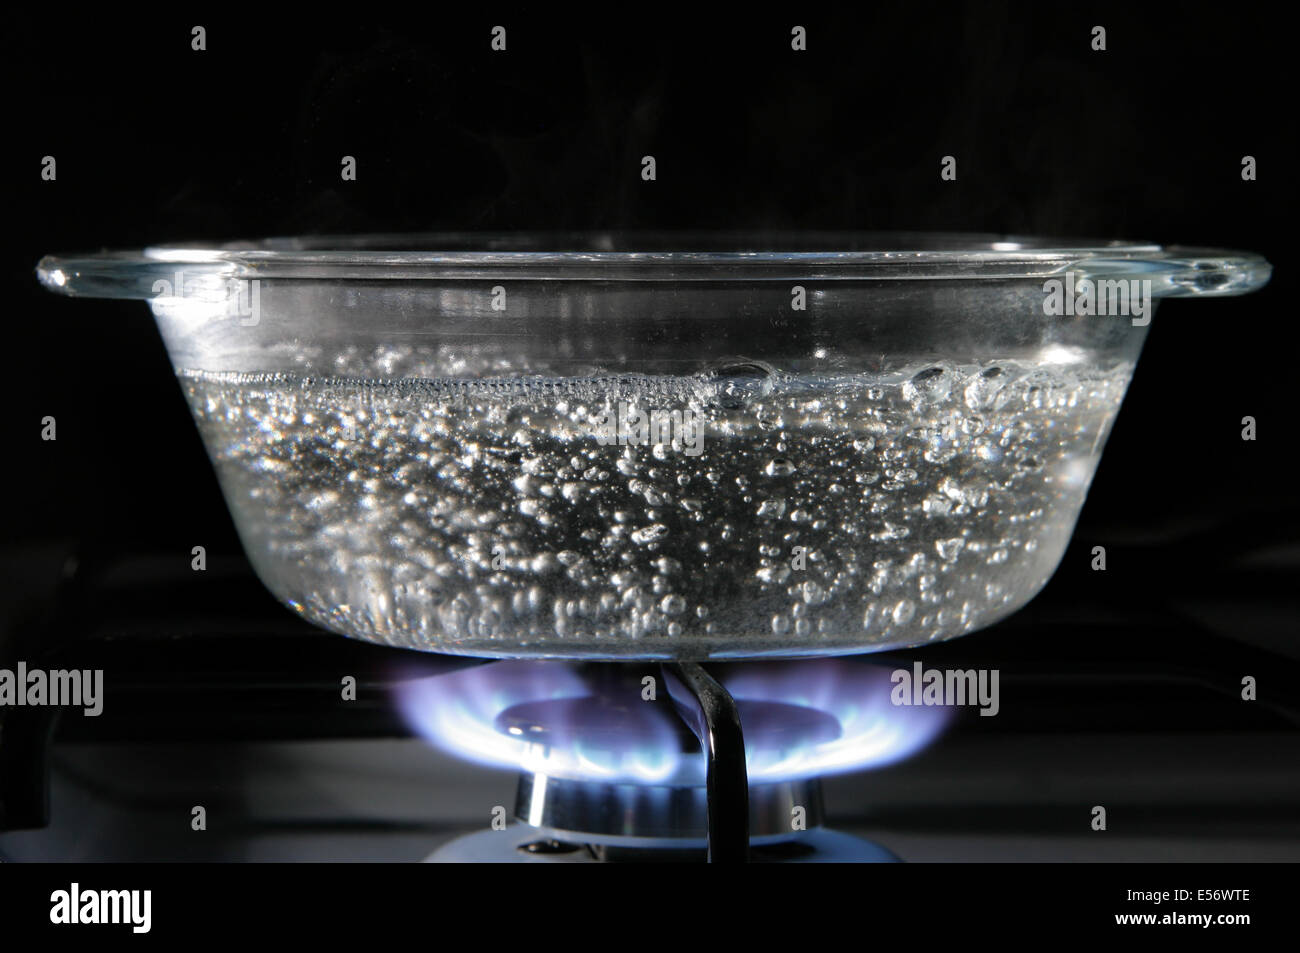 Glass saucepan on the gas stove close-up Stock Photo